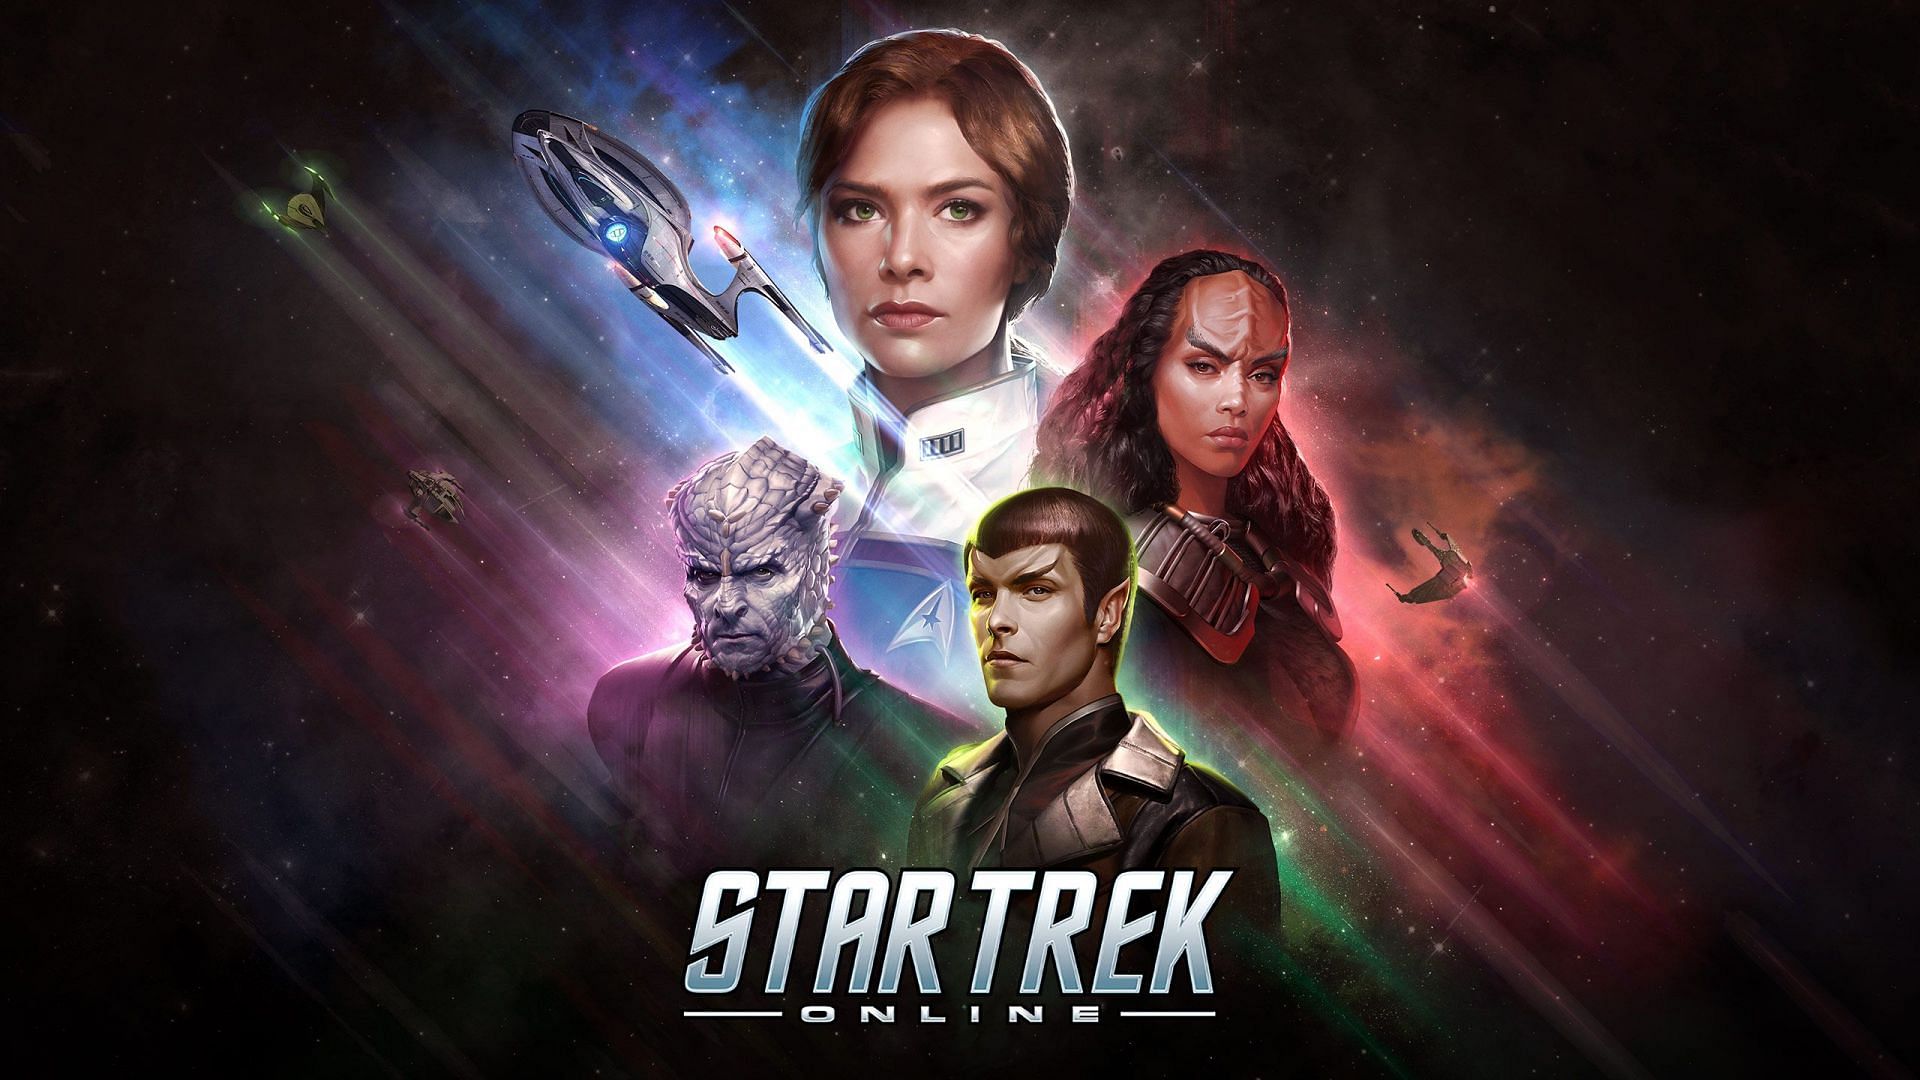 Star Trek Online cover poster (Image via Cryptic Studios)